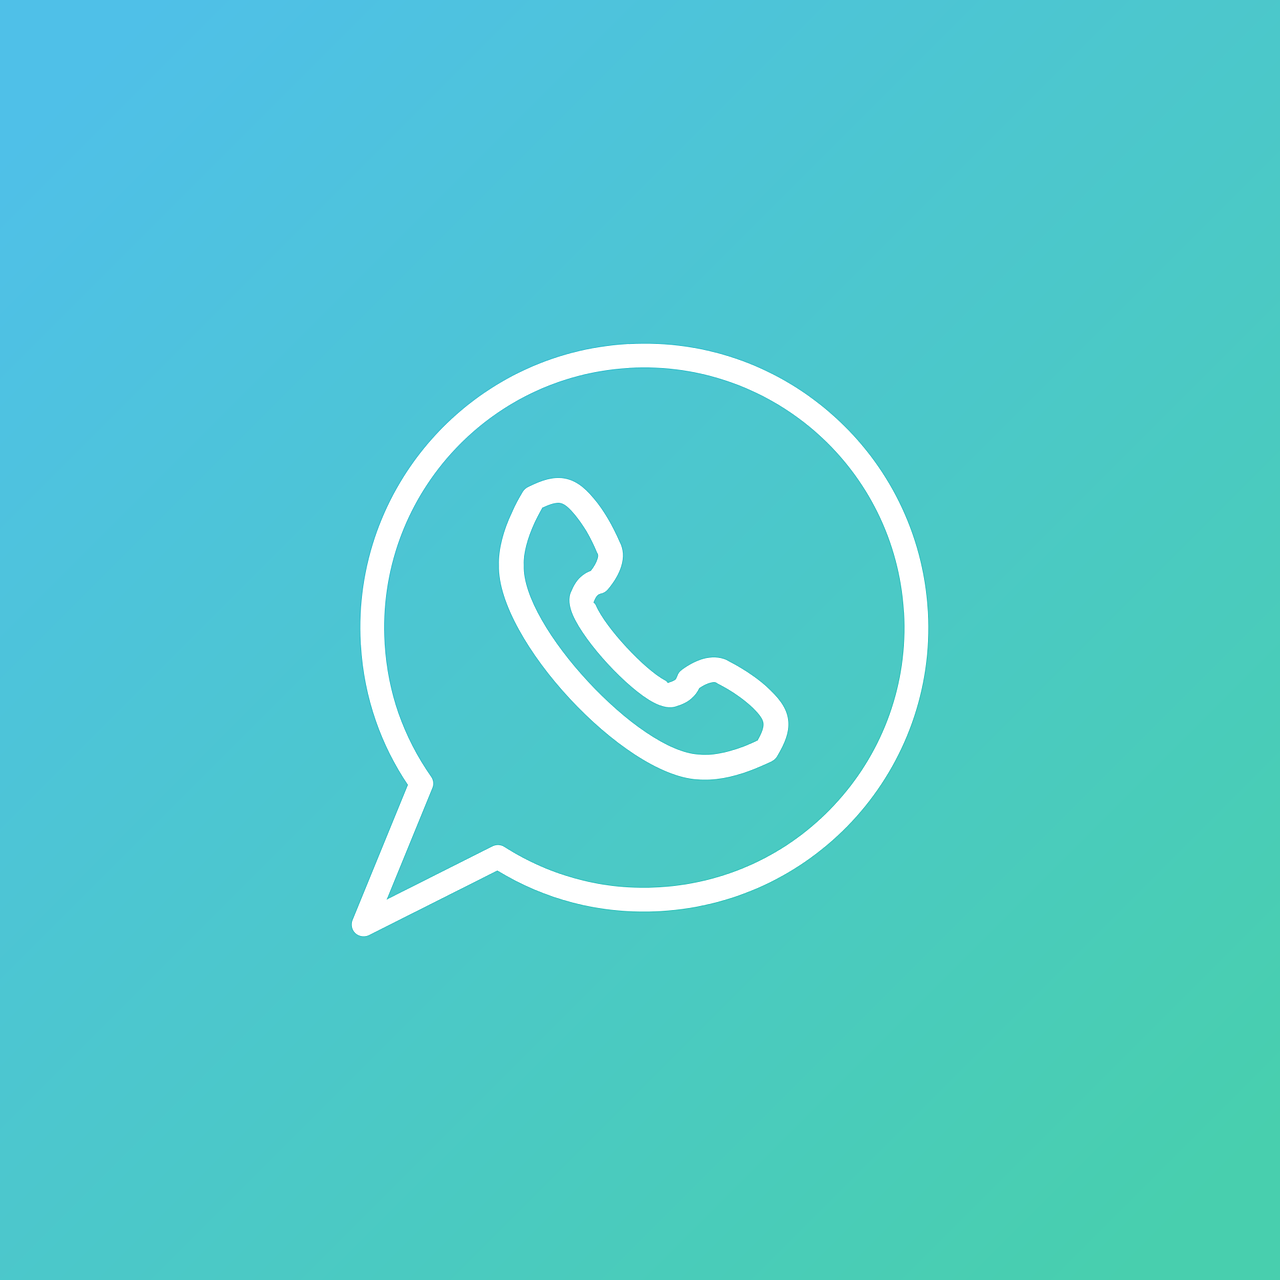 Whatsapp, Kas Yra, Whatsapp Piktograma, Whatsapp Logotipas, Whatsapp Simbolis, Socialiniai Tinklai, Internetas, Tinklas, Socialinis, Socialinis Tinklas